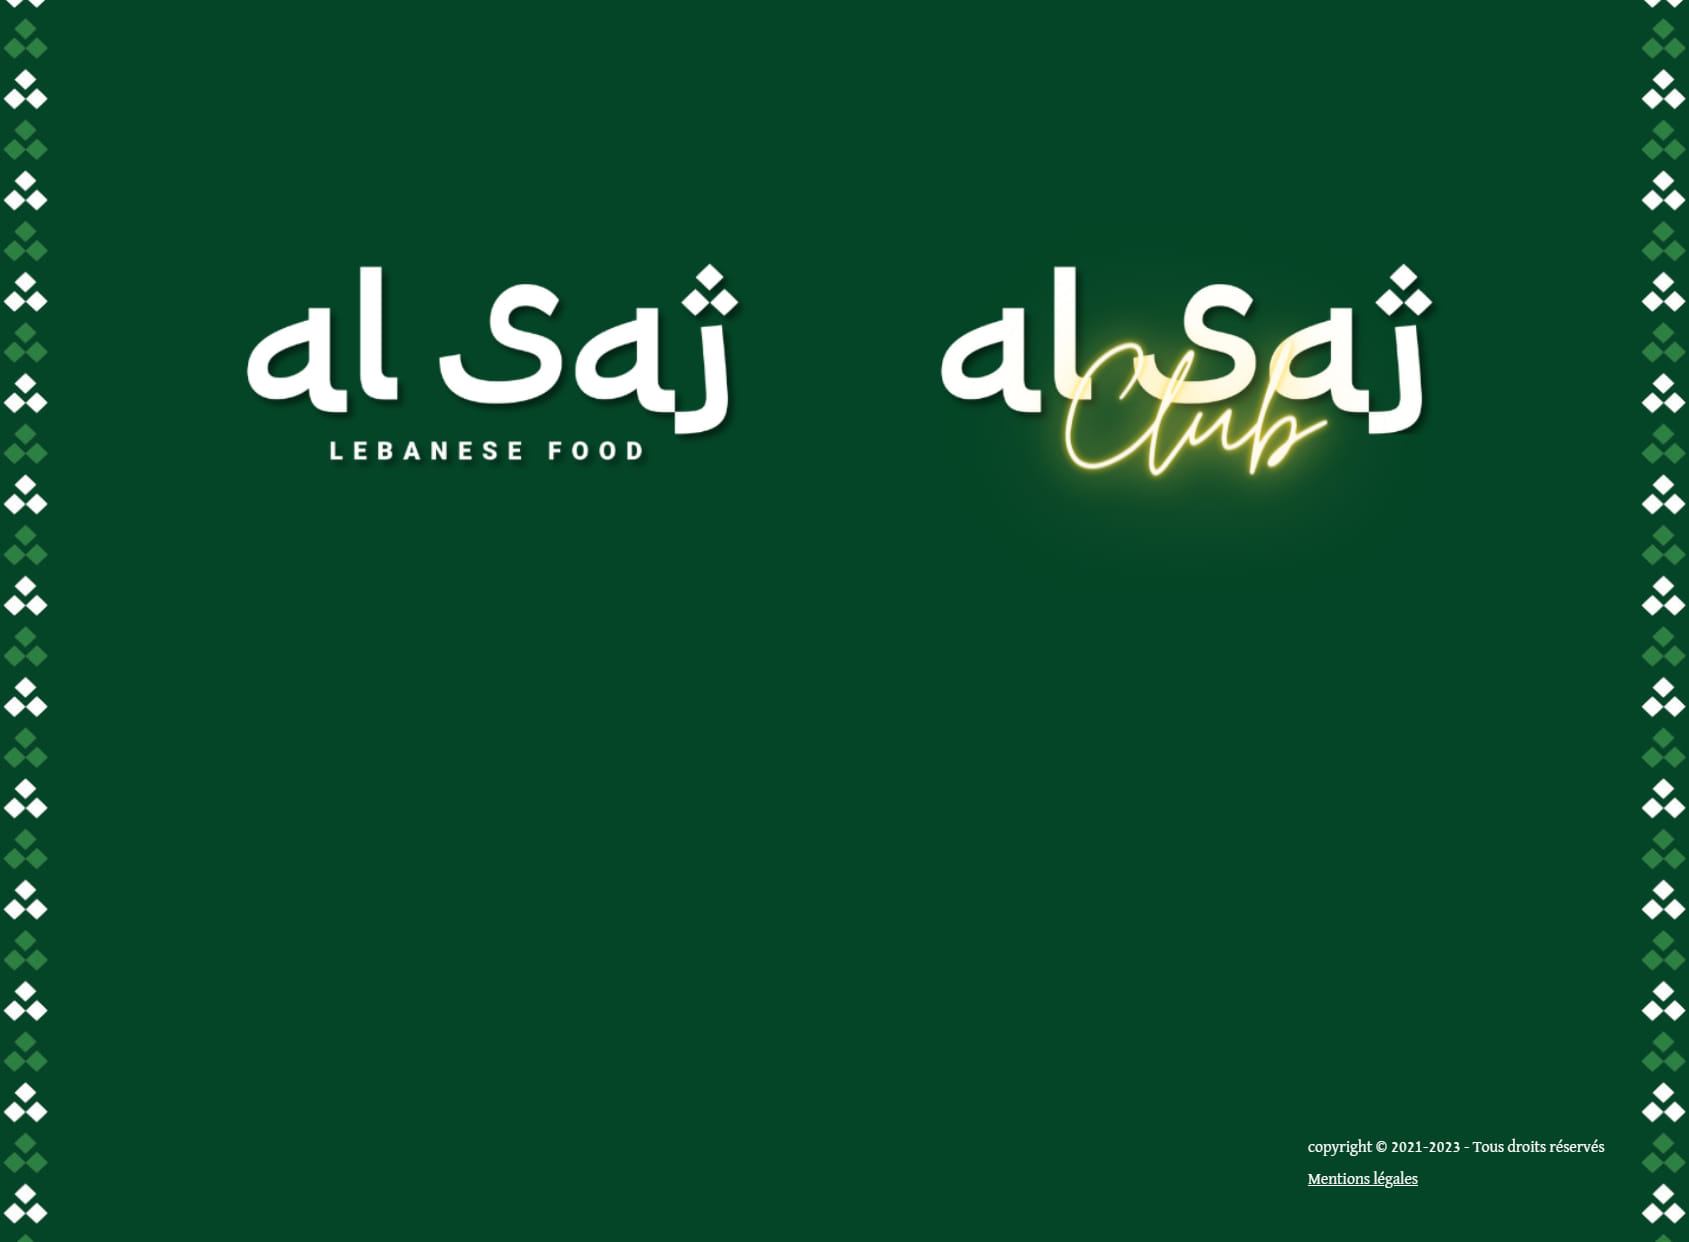 Al-SAJ